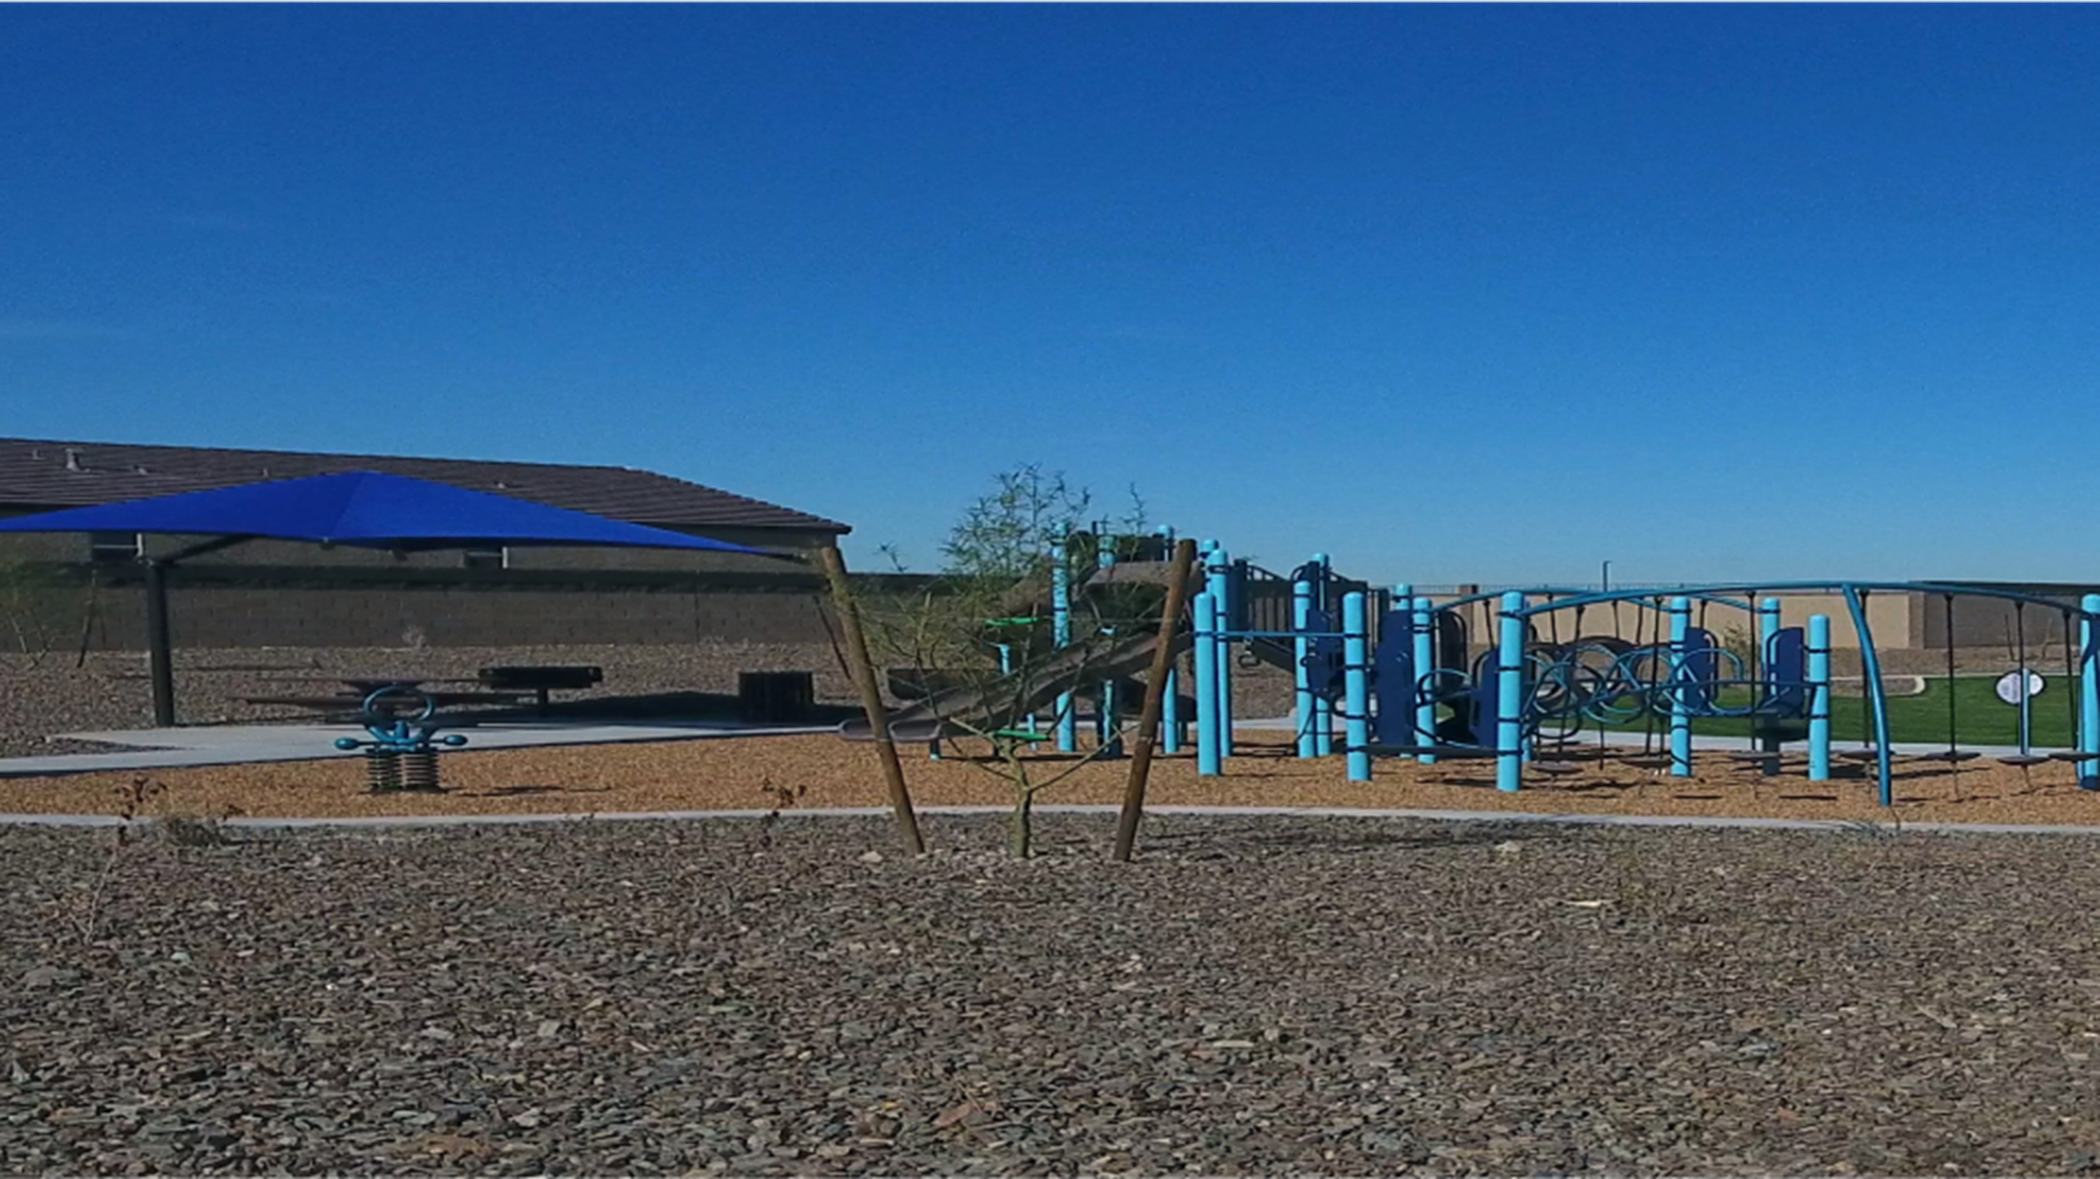 Playground image in daylight